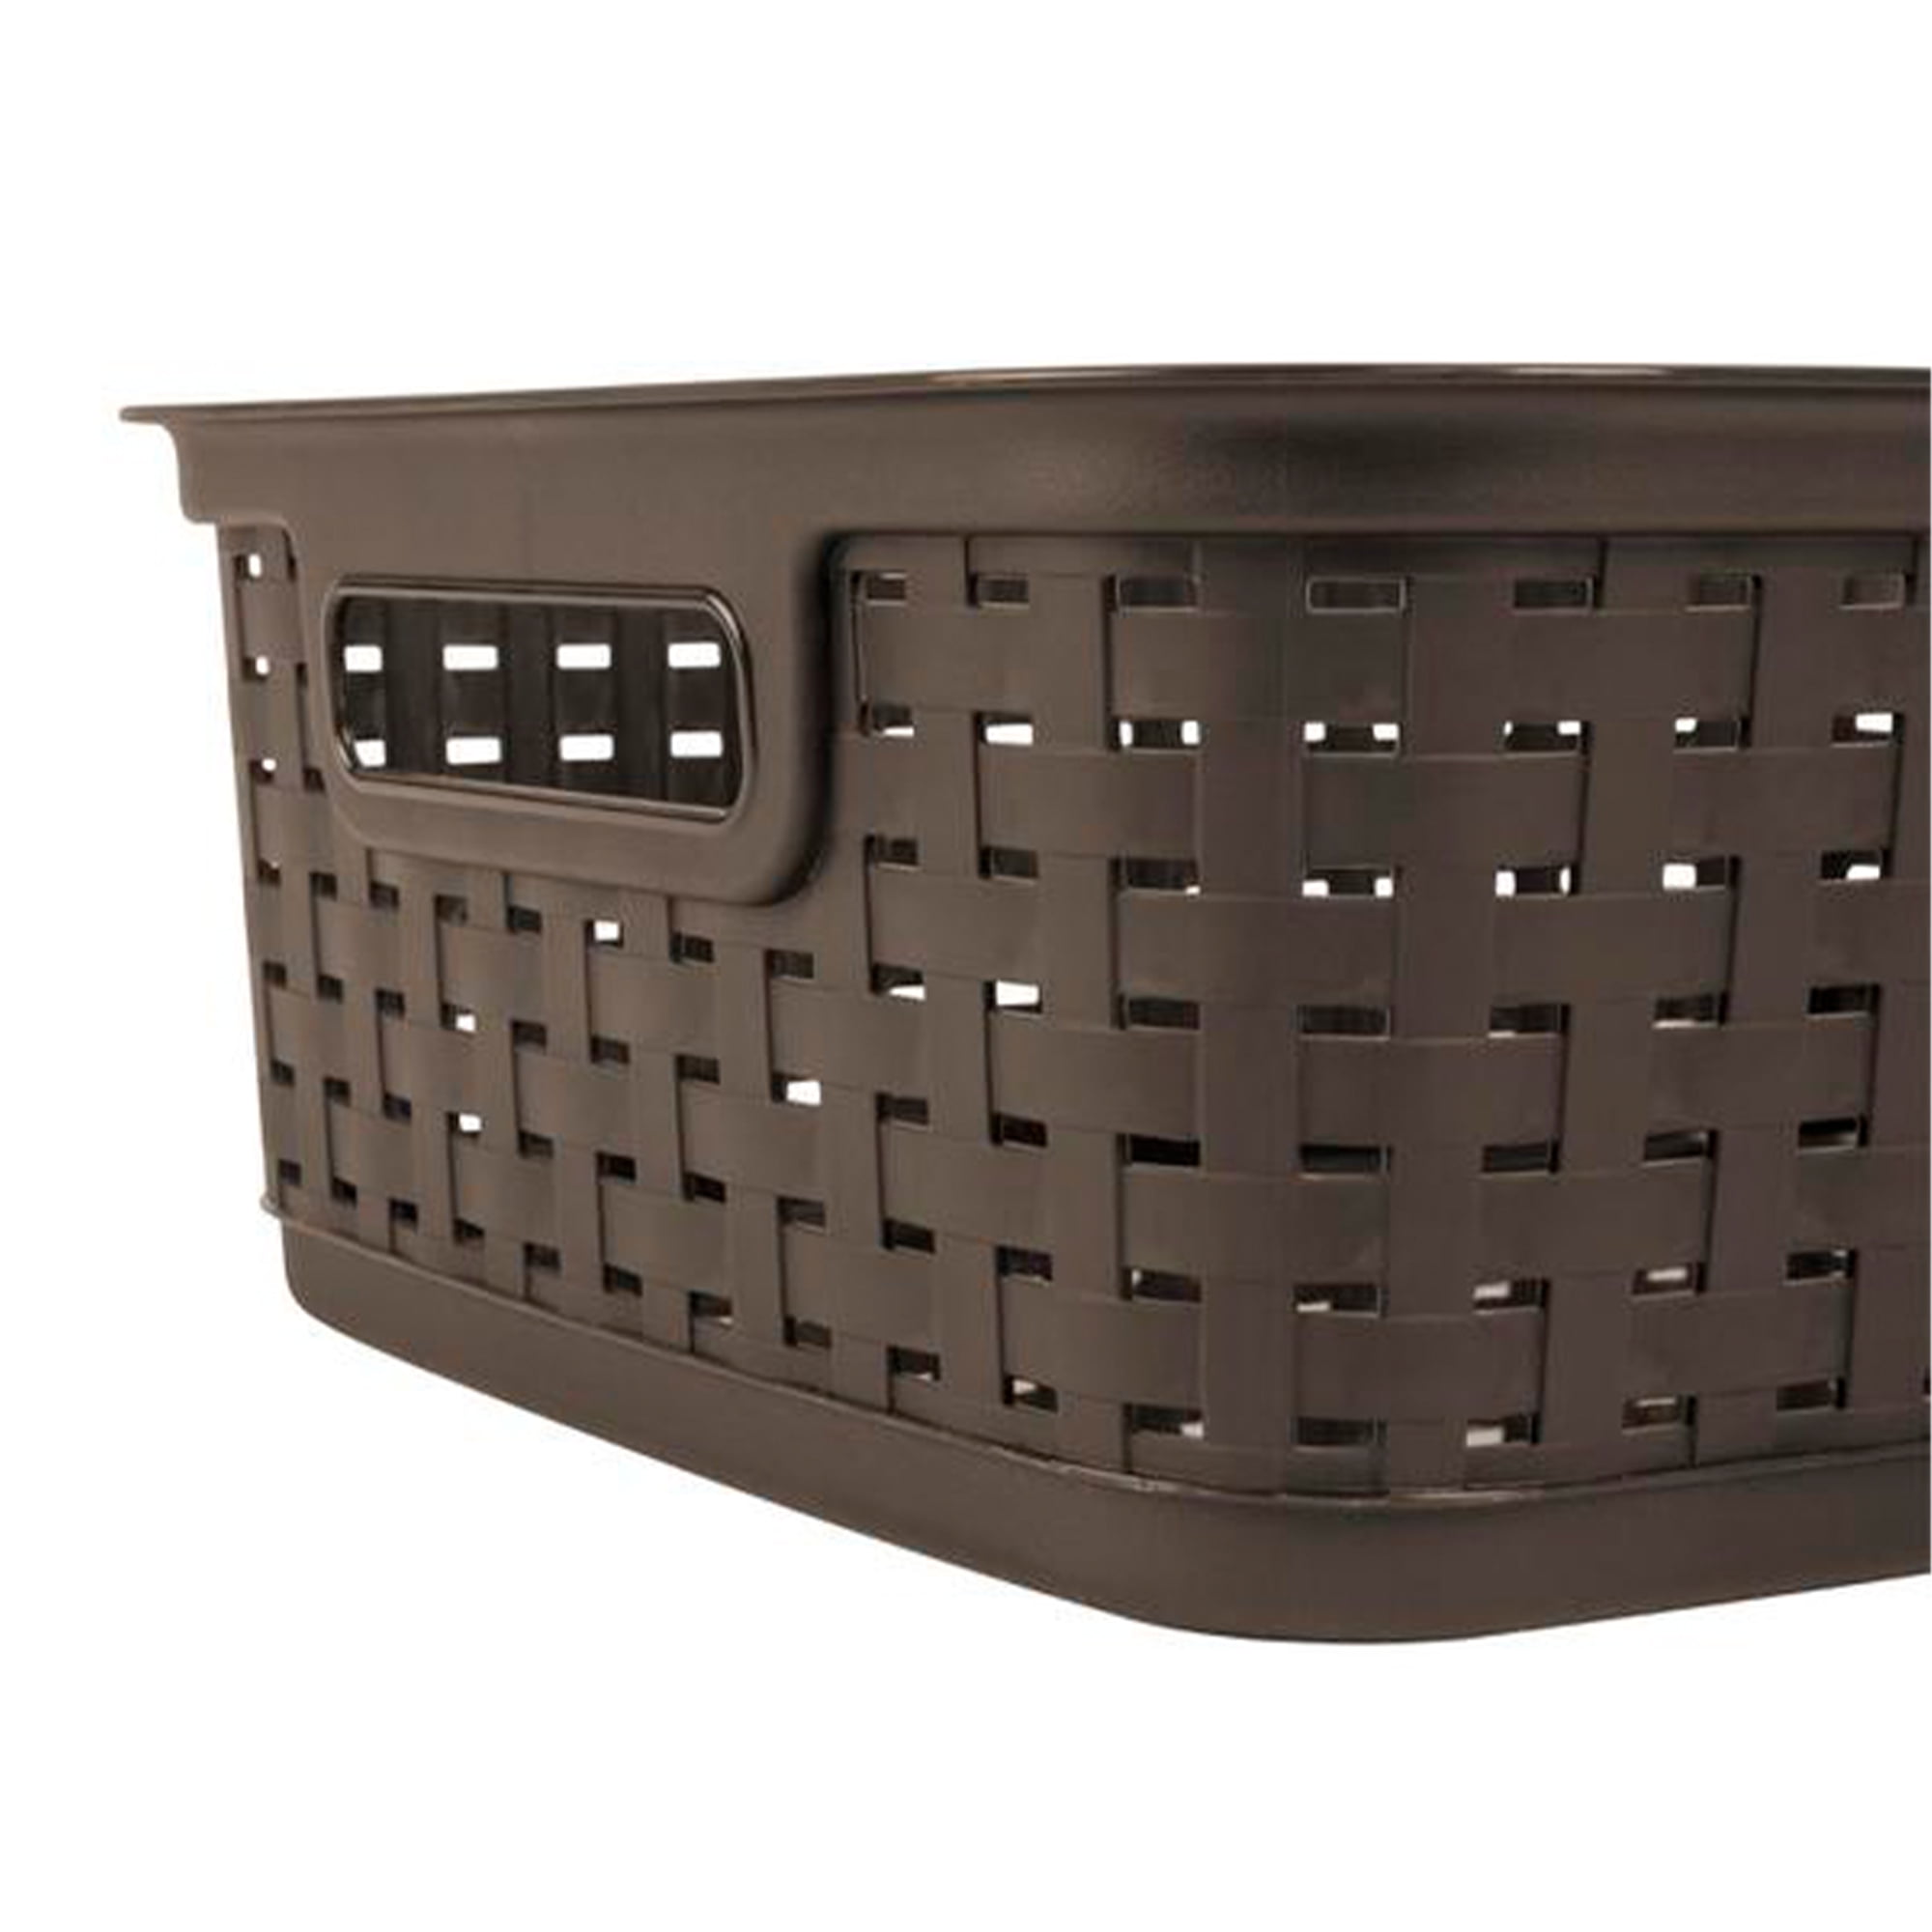 Sterilite Short Weave Wicker Pattern Storage Container Basket, Gray (6 Pack)